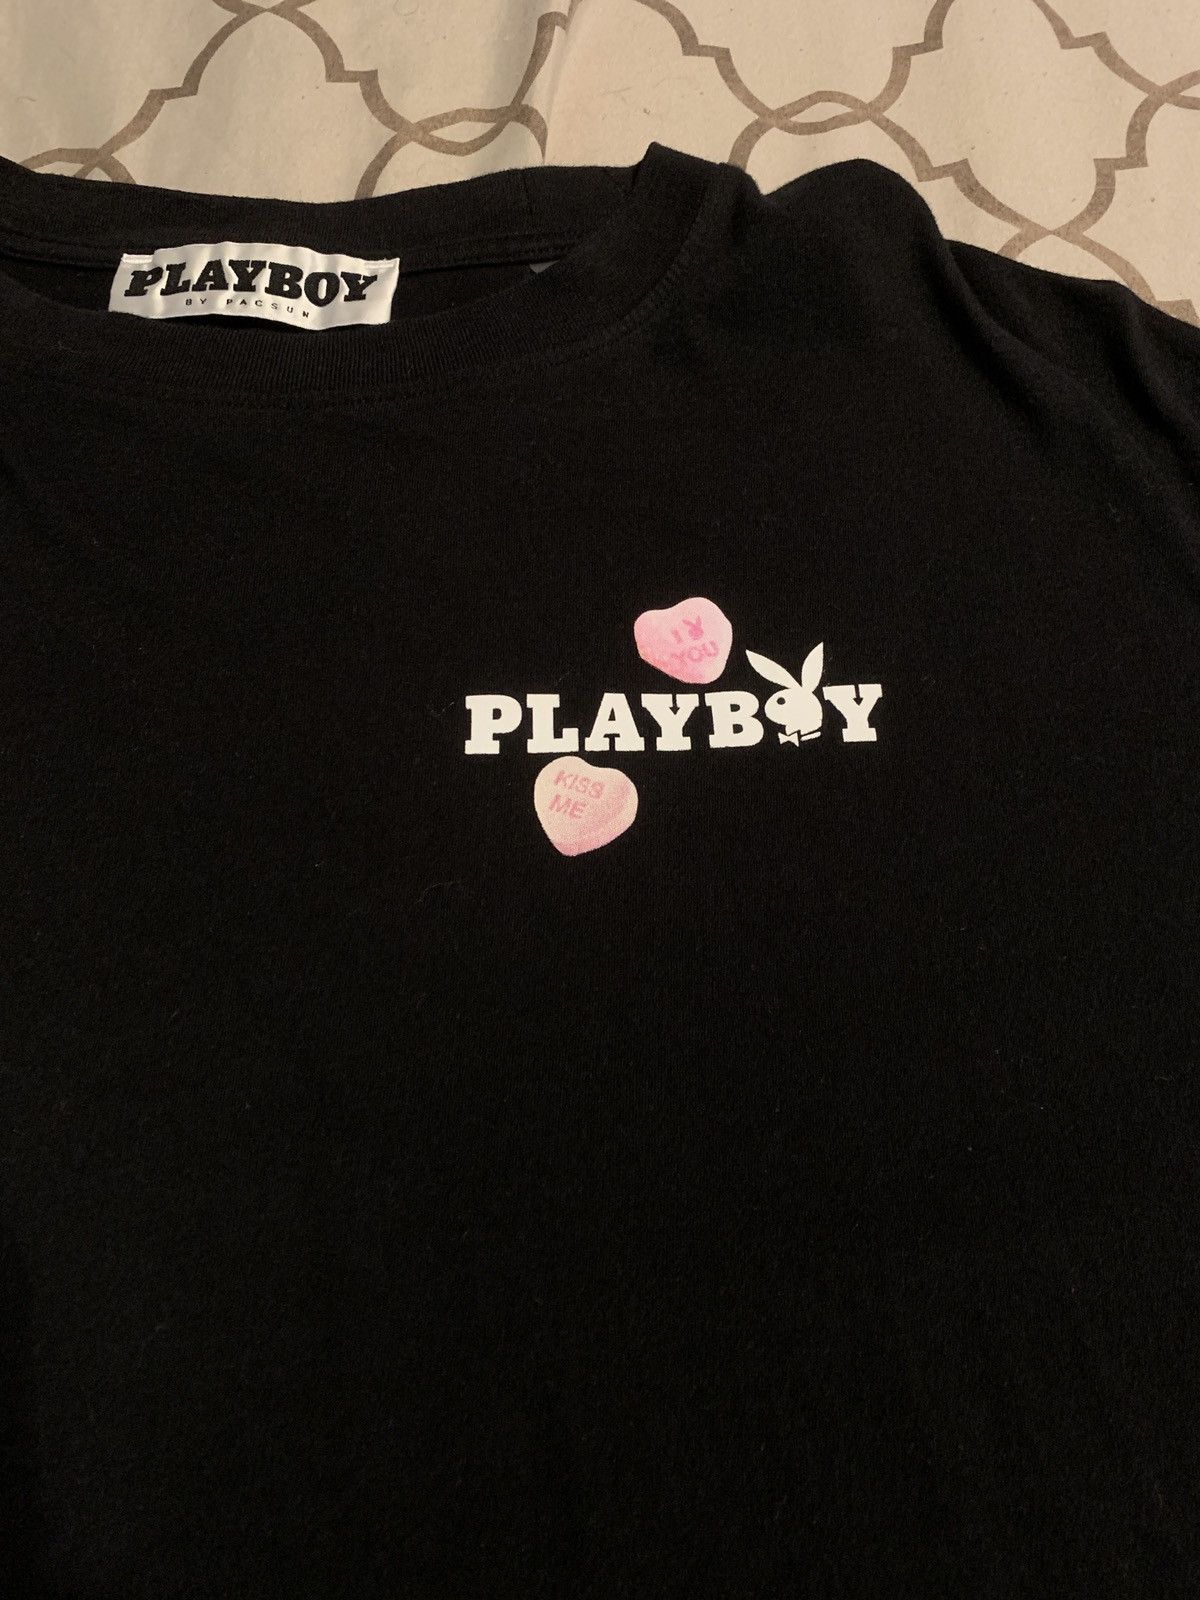 Playboy playboy long sleeve Size US M / EU 48-50 / 2 - 2 Preview